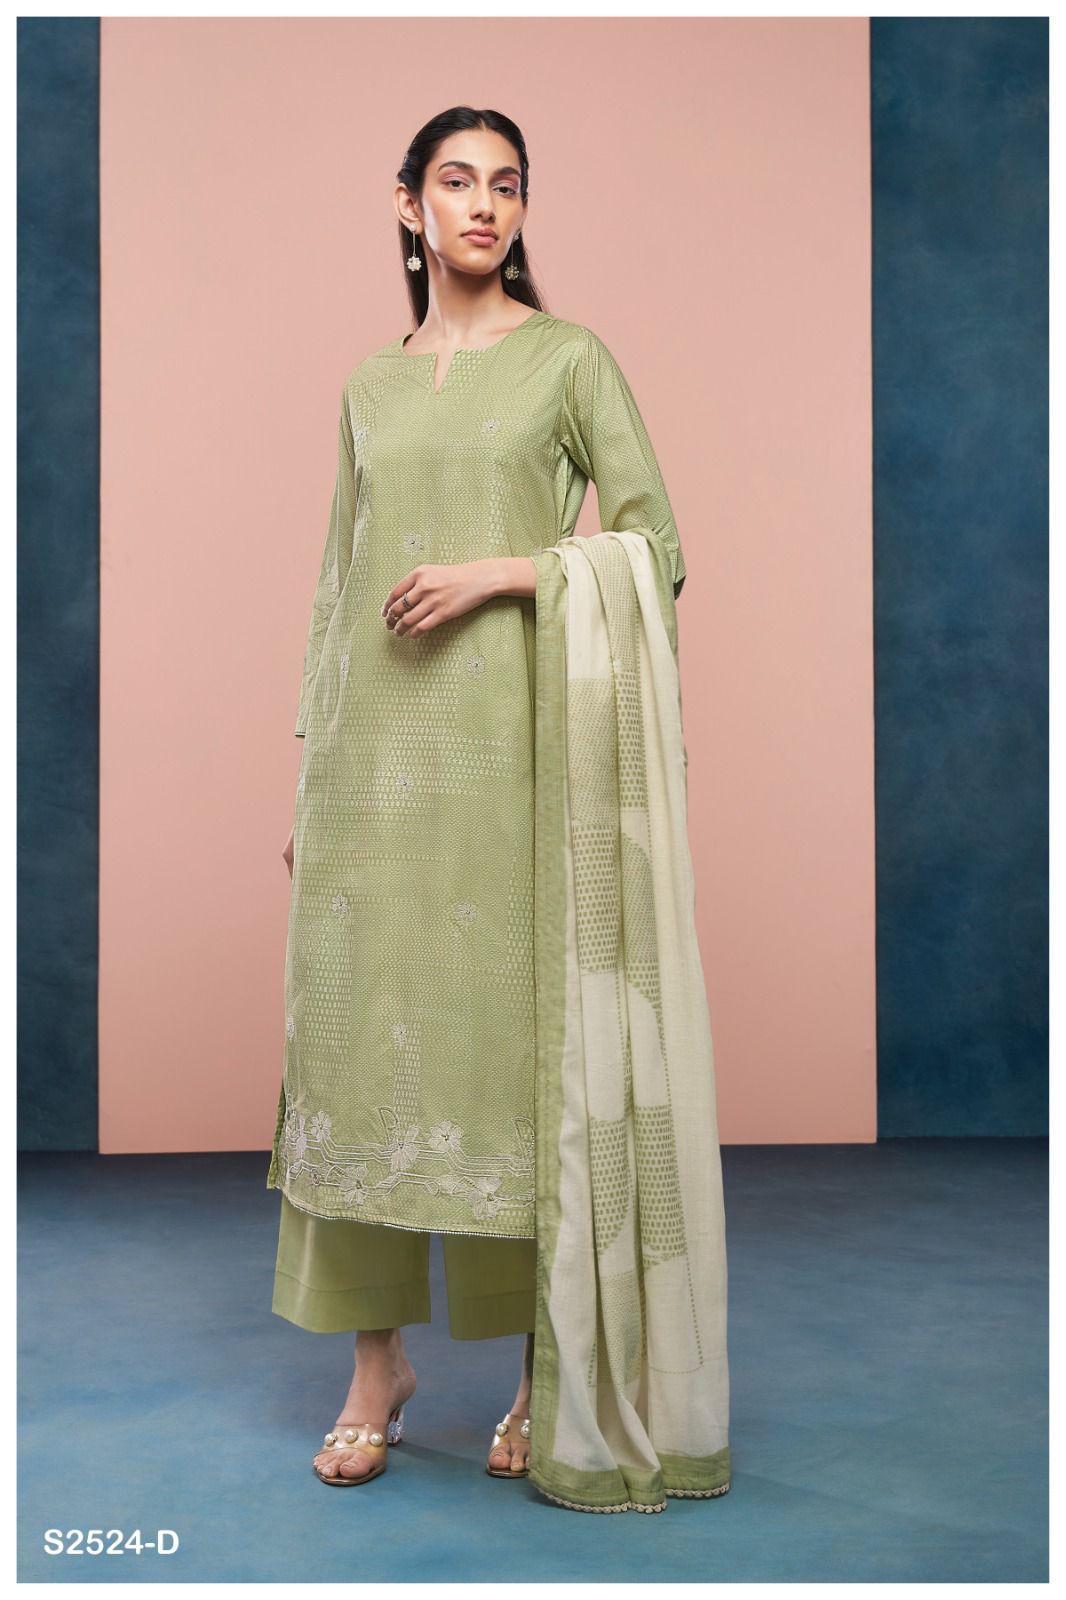 Dallyn 2524 Ganga Premium Cotton Plazzo Style Suits Wholesaler Gujarat